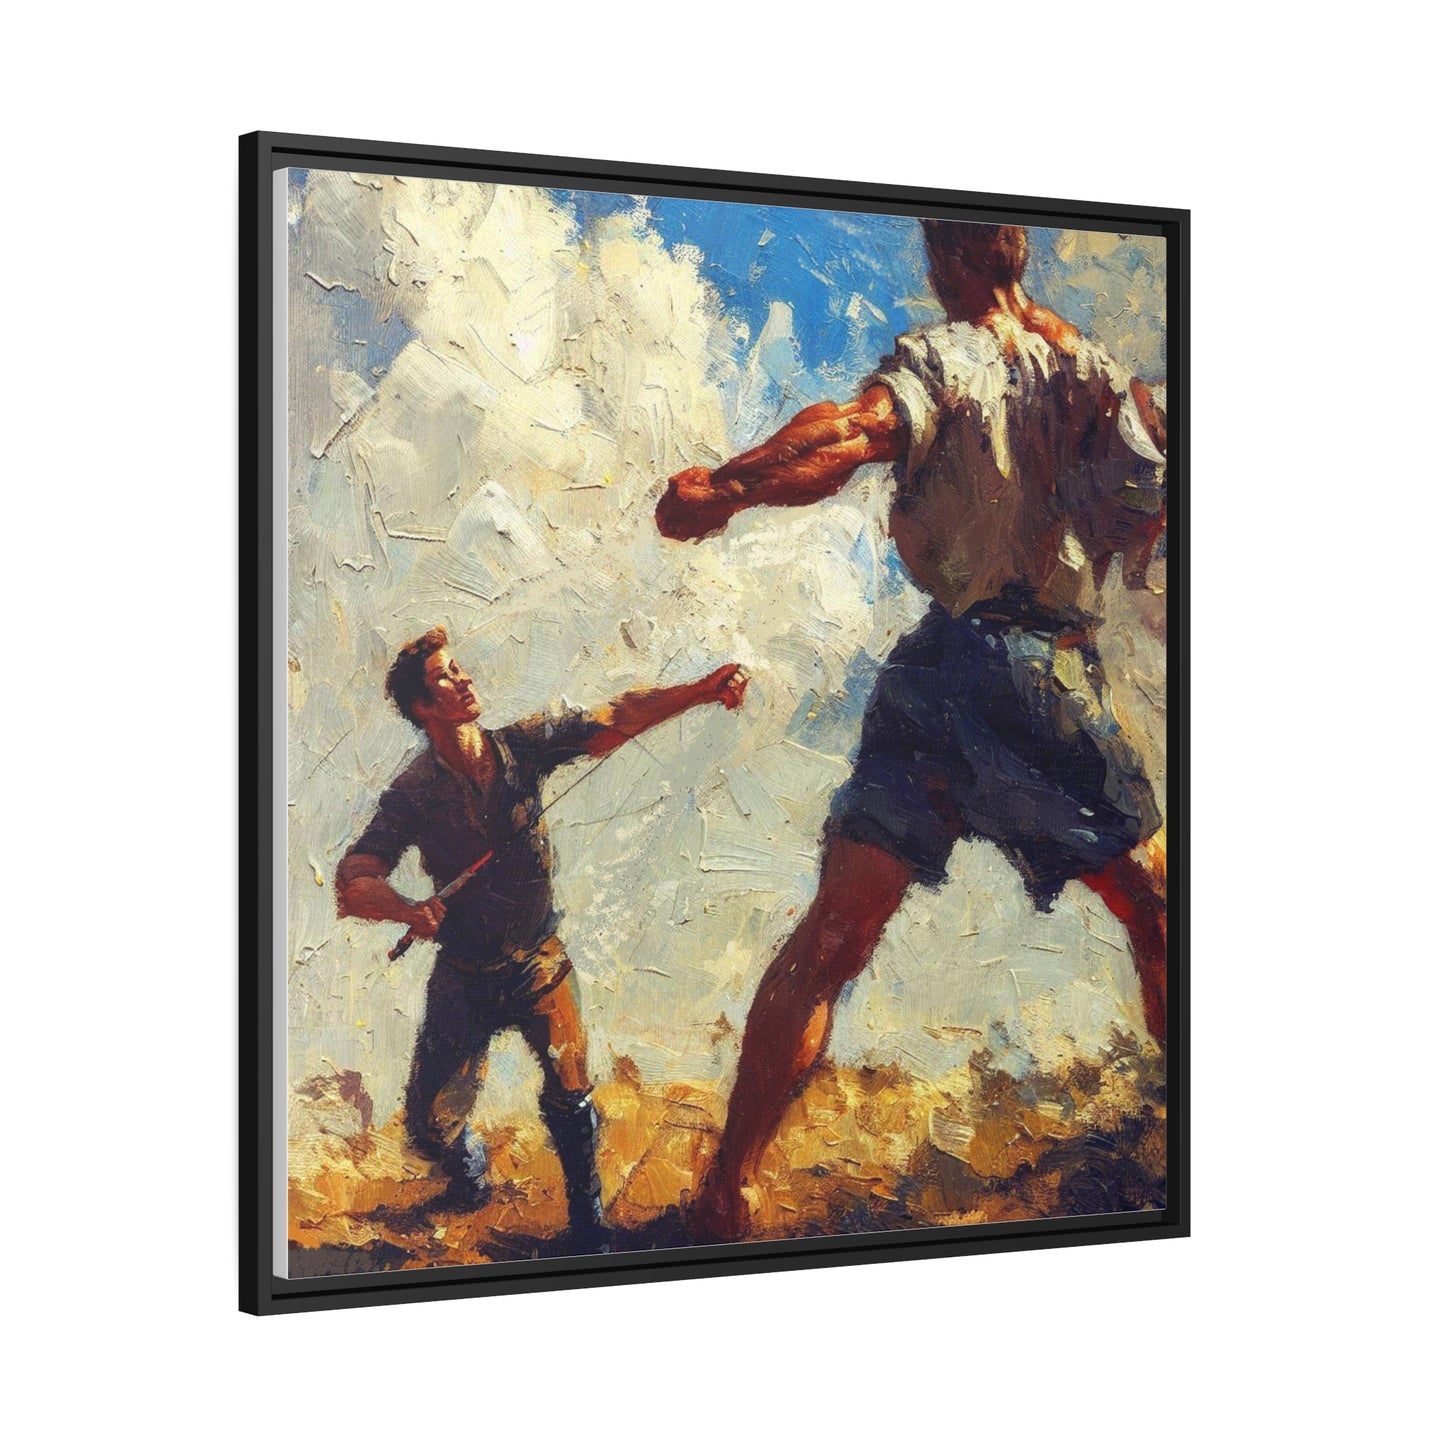 Art-of-Apparel - David and Goliath - Framed Black Canvas Art Gift Items - Matte